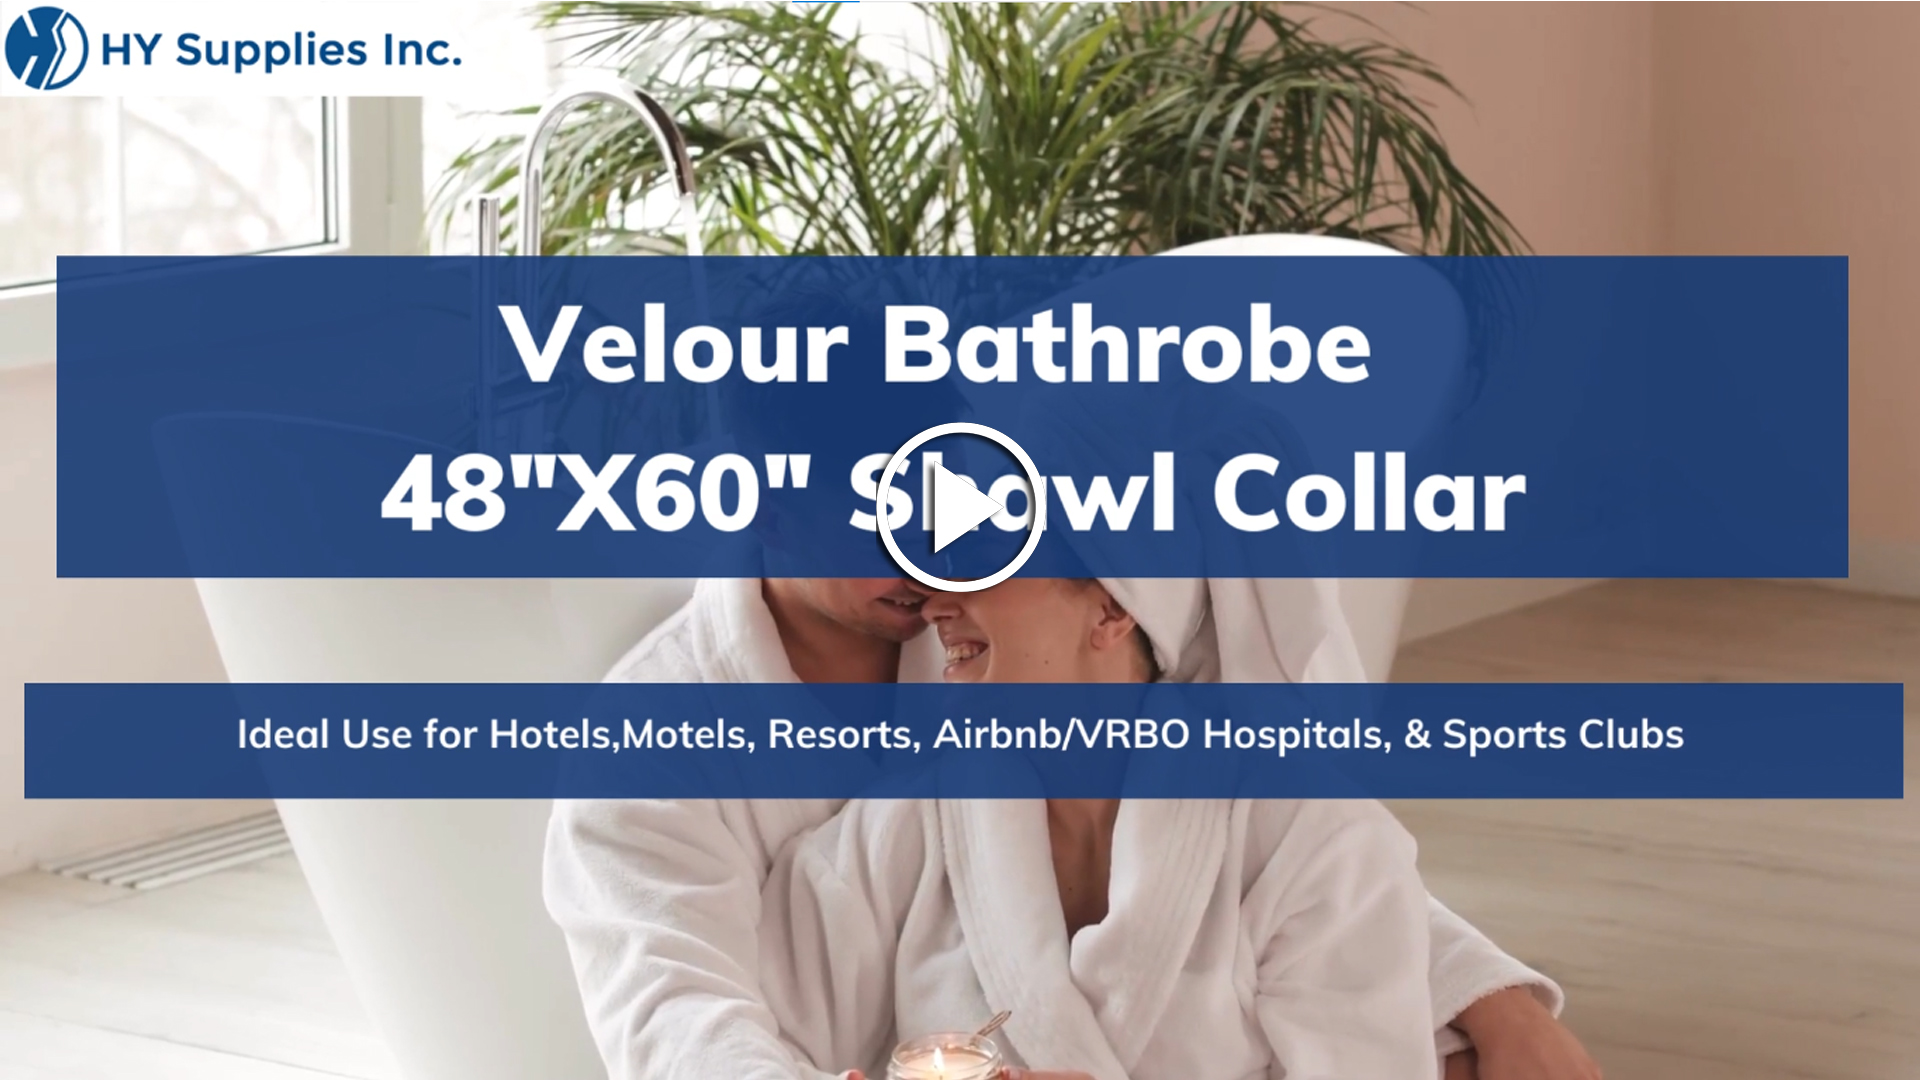 Velour Bathrobe - 48"X60"Shawl Collar